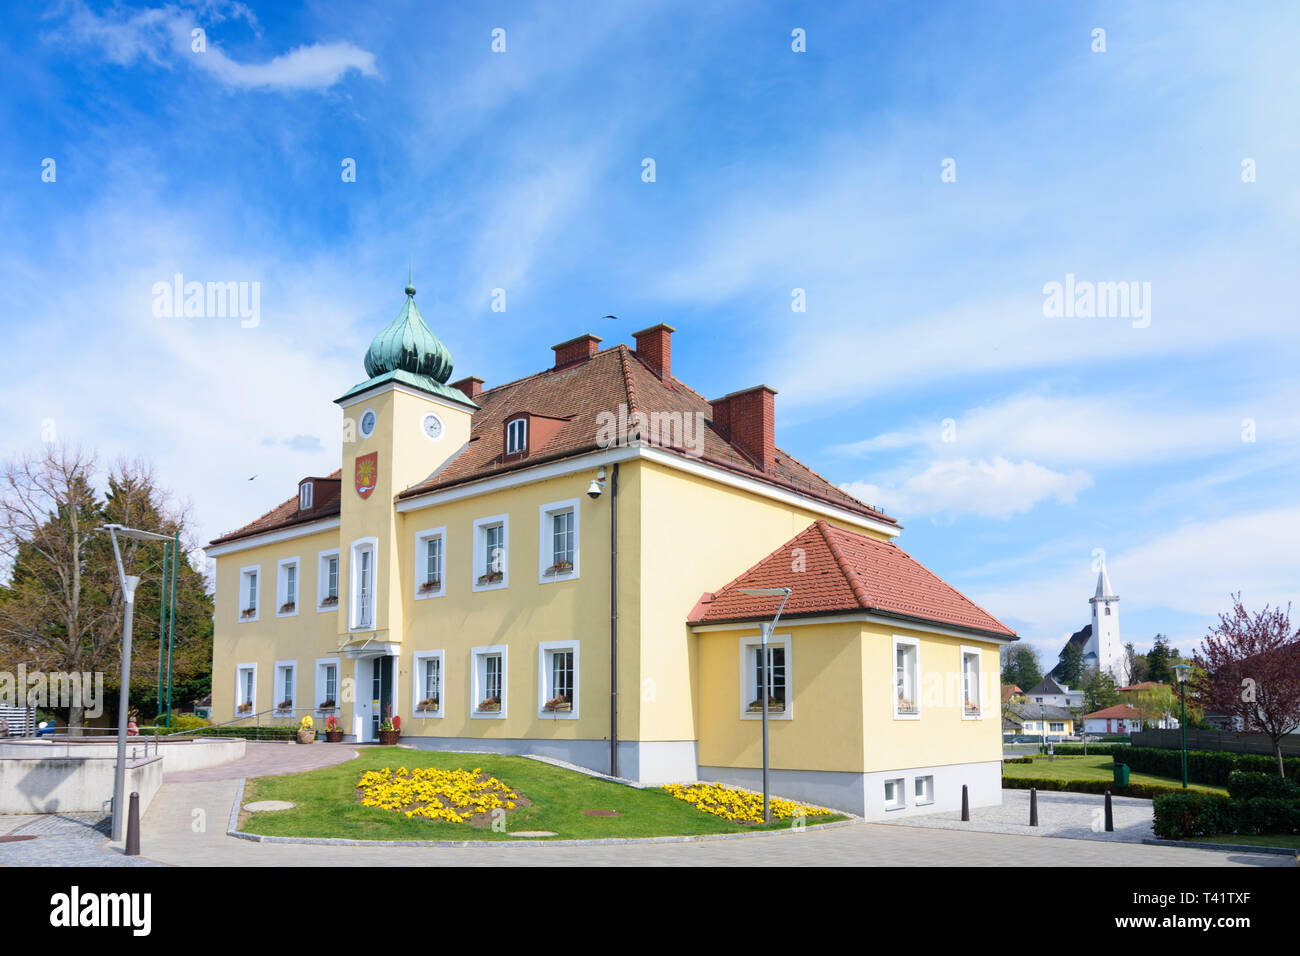 Siegendorf: Town Hall, church in Neusiedler See (Lake Neusiedl), Burgenland, Austria Stock Photo